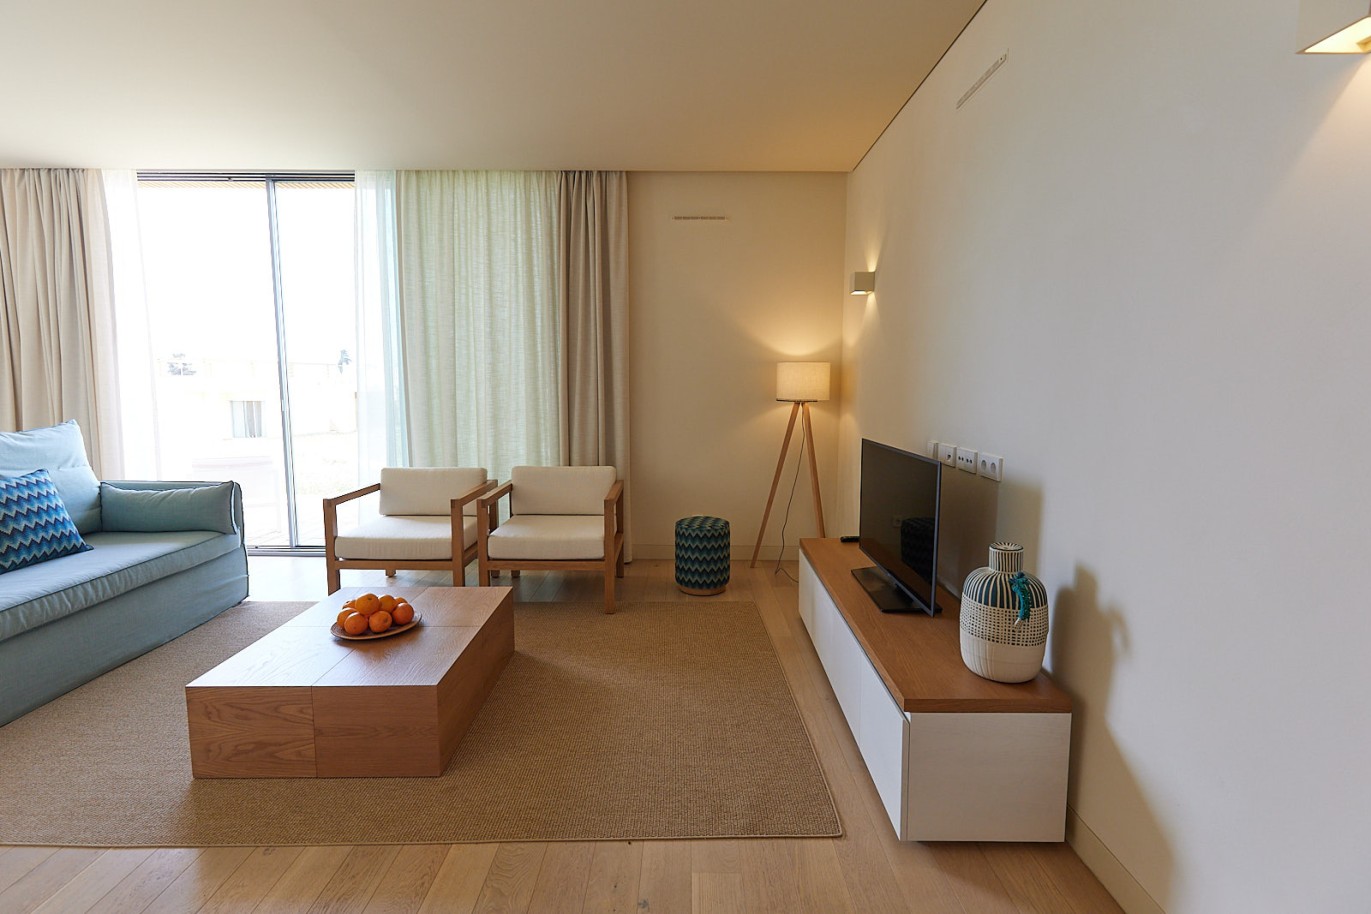 3 bedroom apartment in resort, for sale in Porches, Algarve_228606